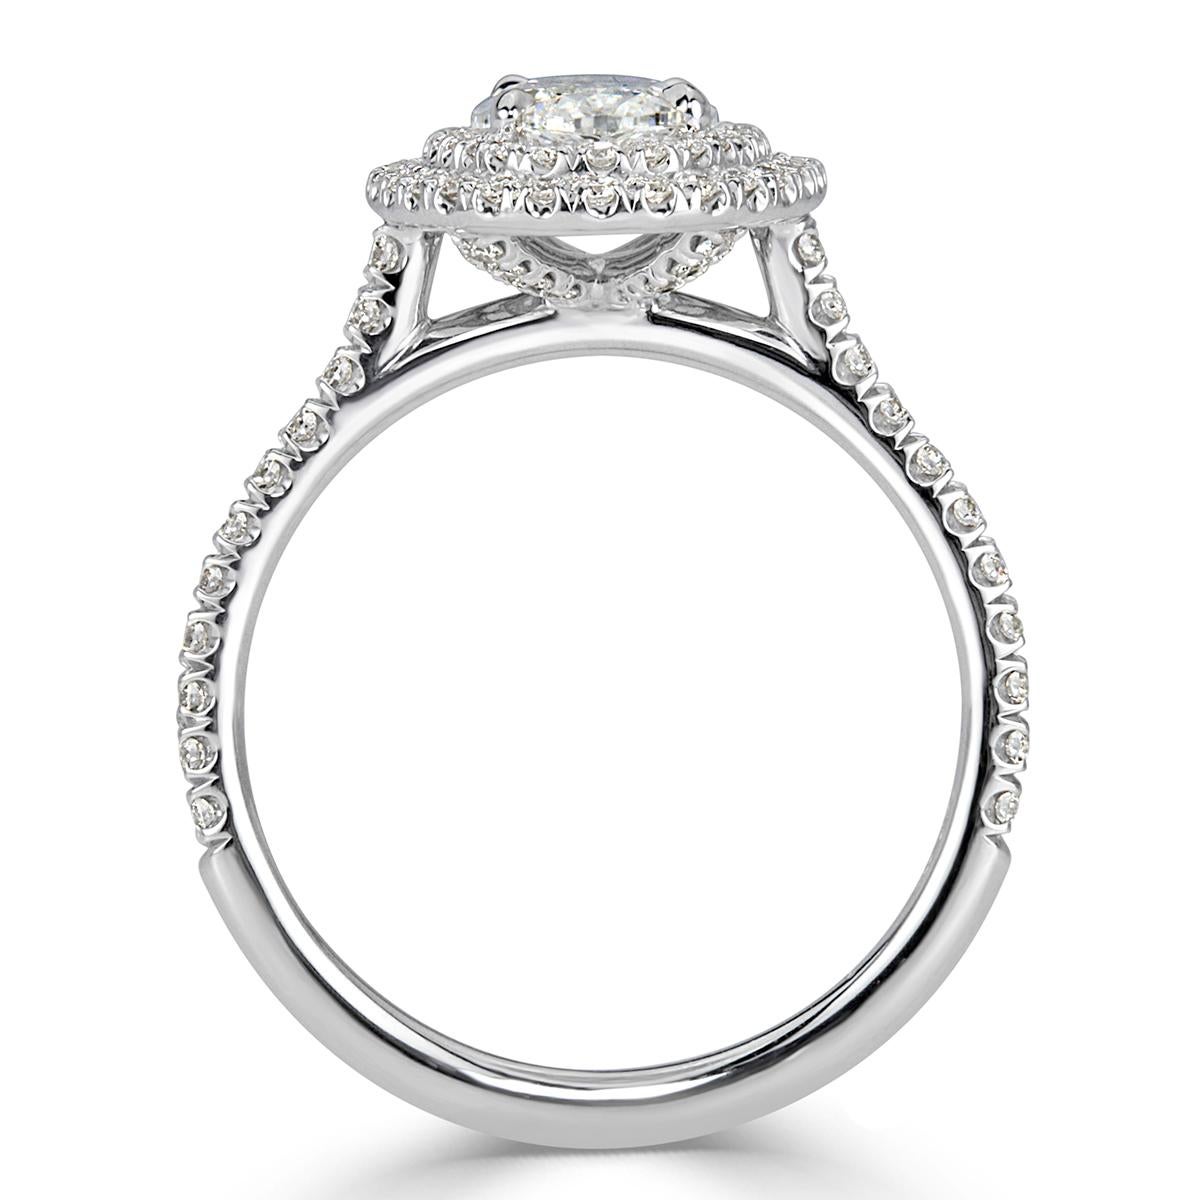 Women's or Men's Mark Broumand 1.59 Carat Oval Cut Diamond Engagement Ring